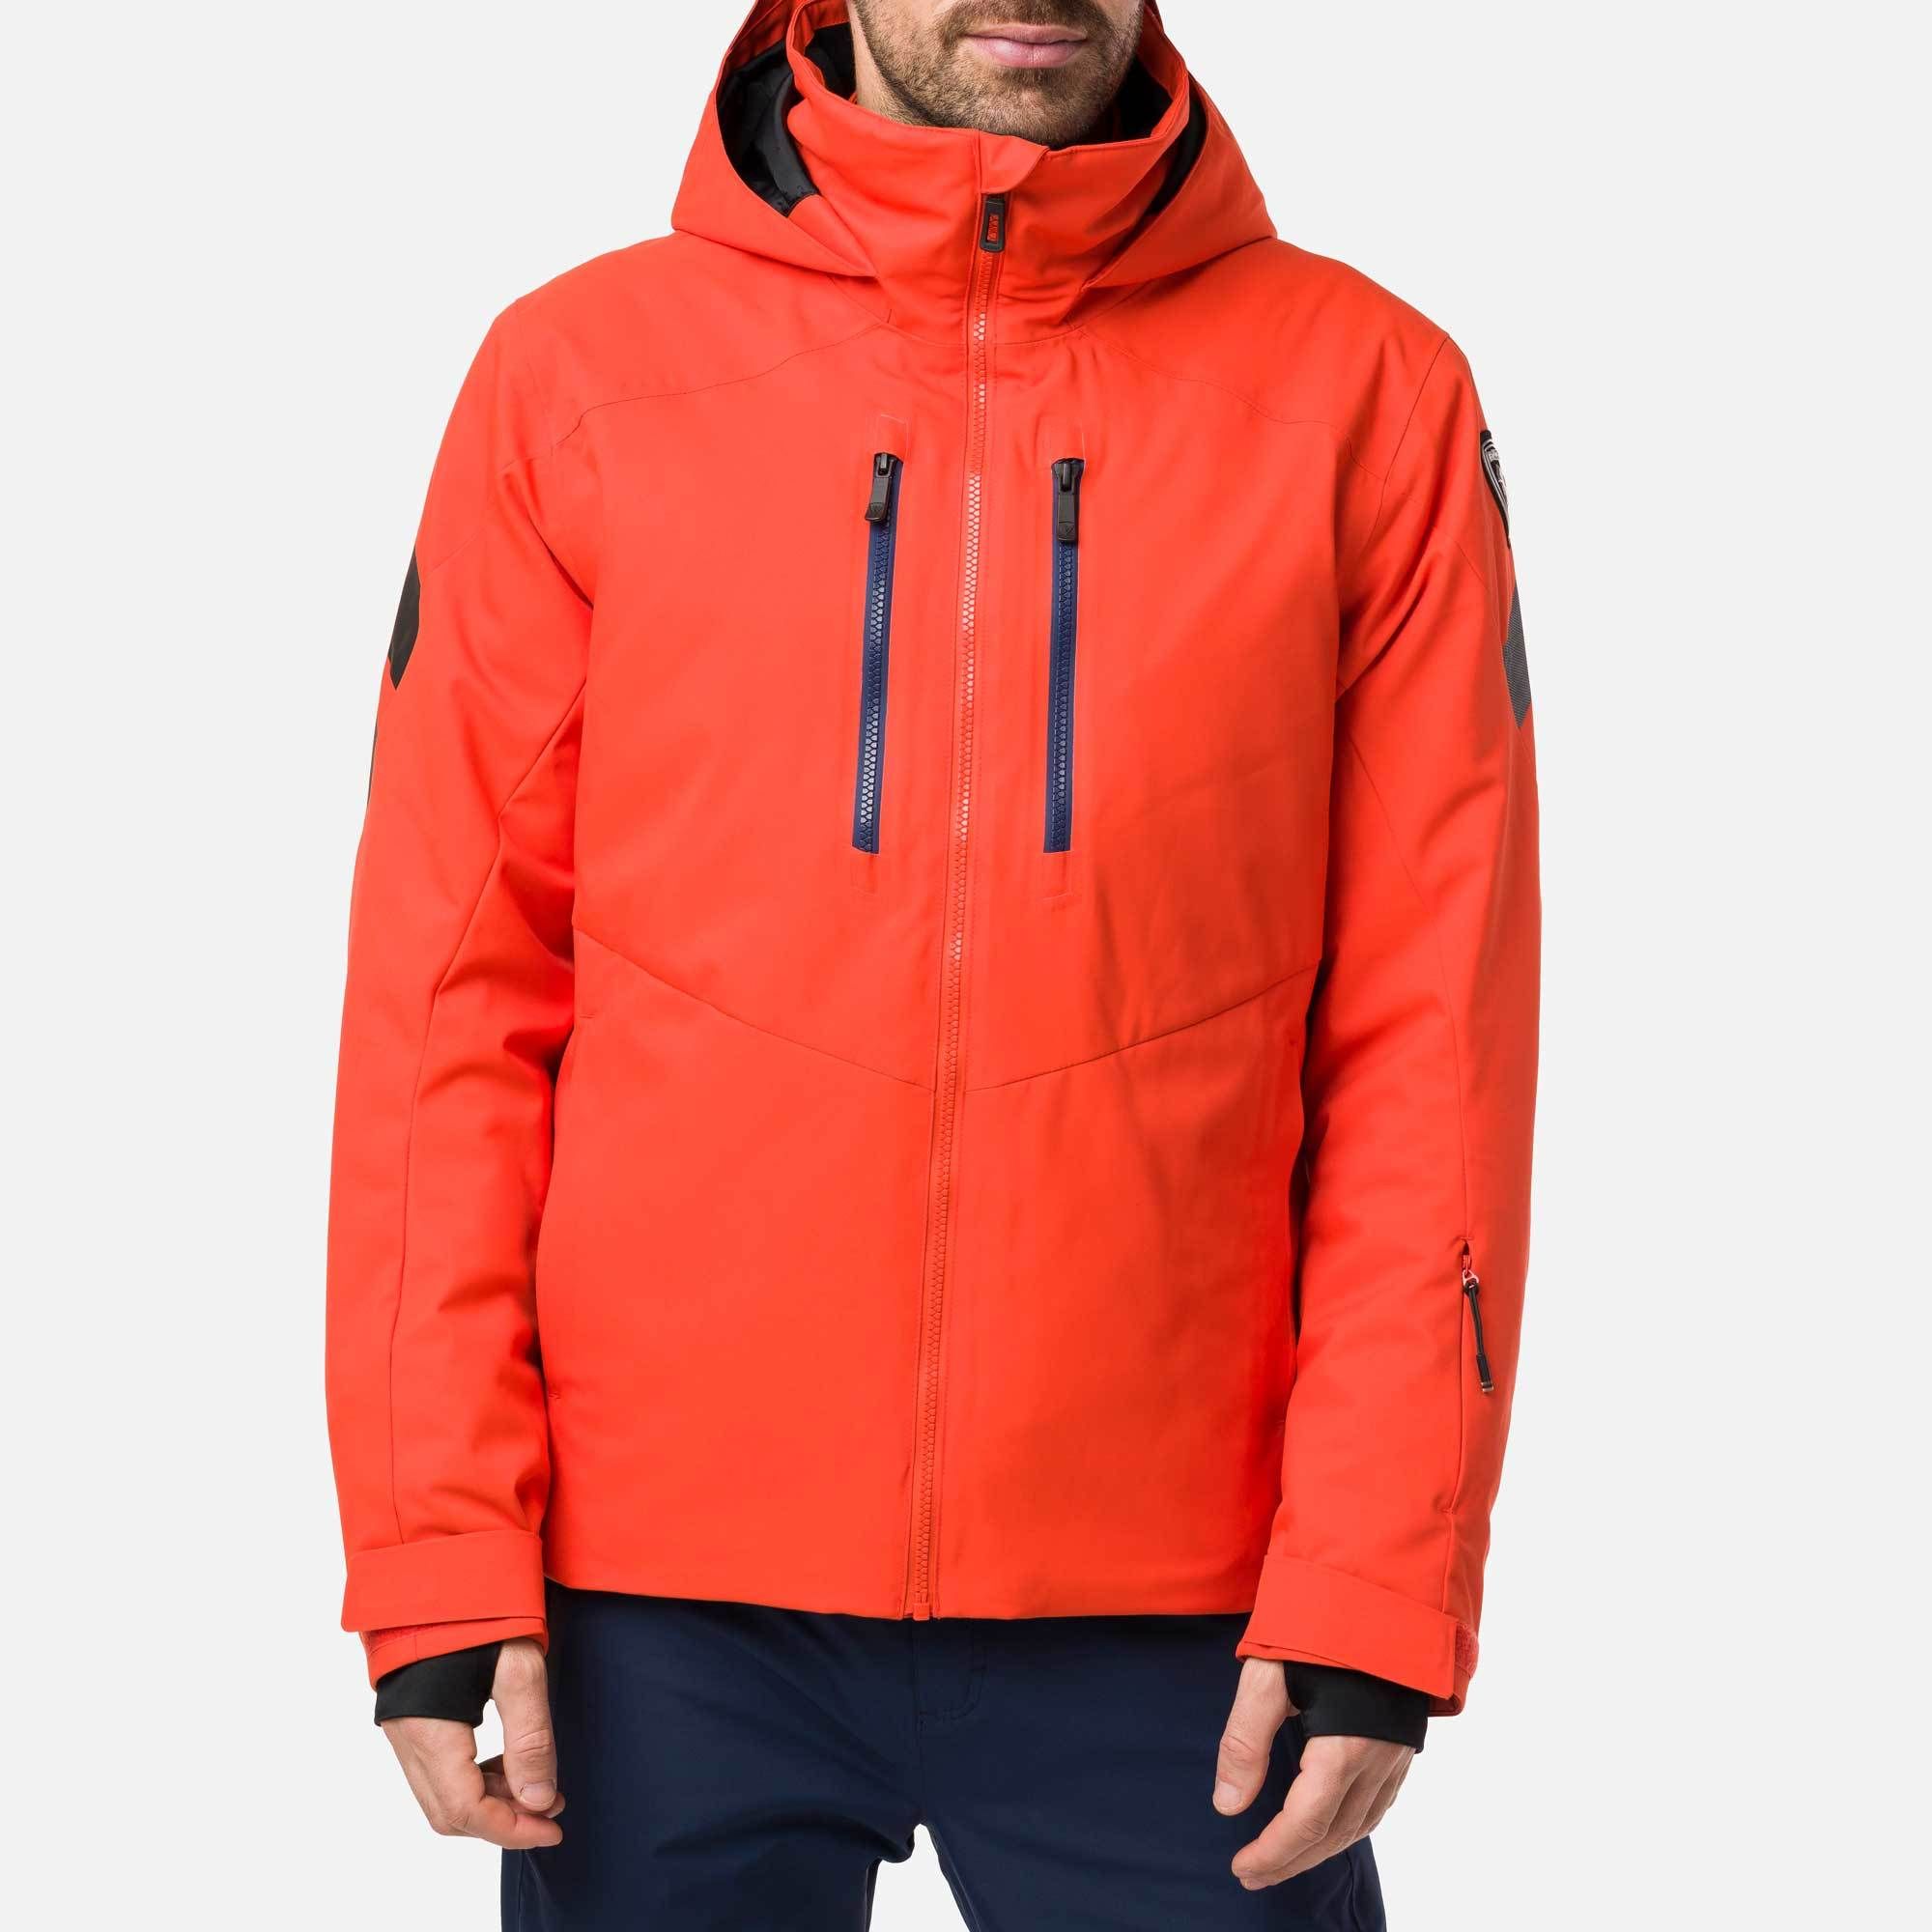 Men’s ski jacket